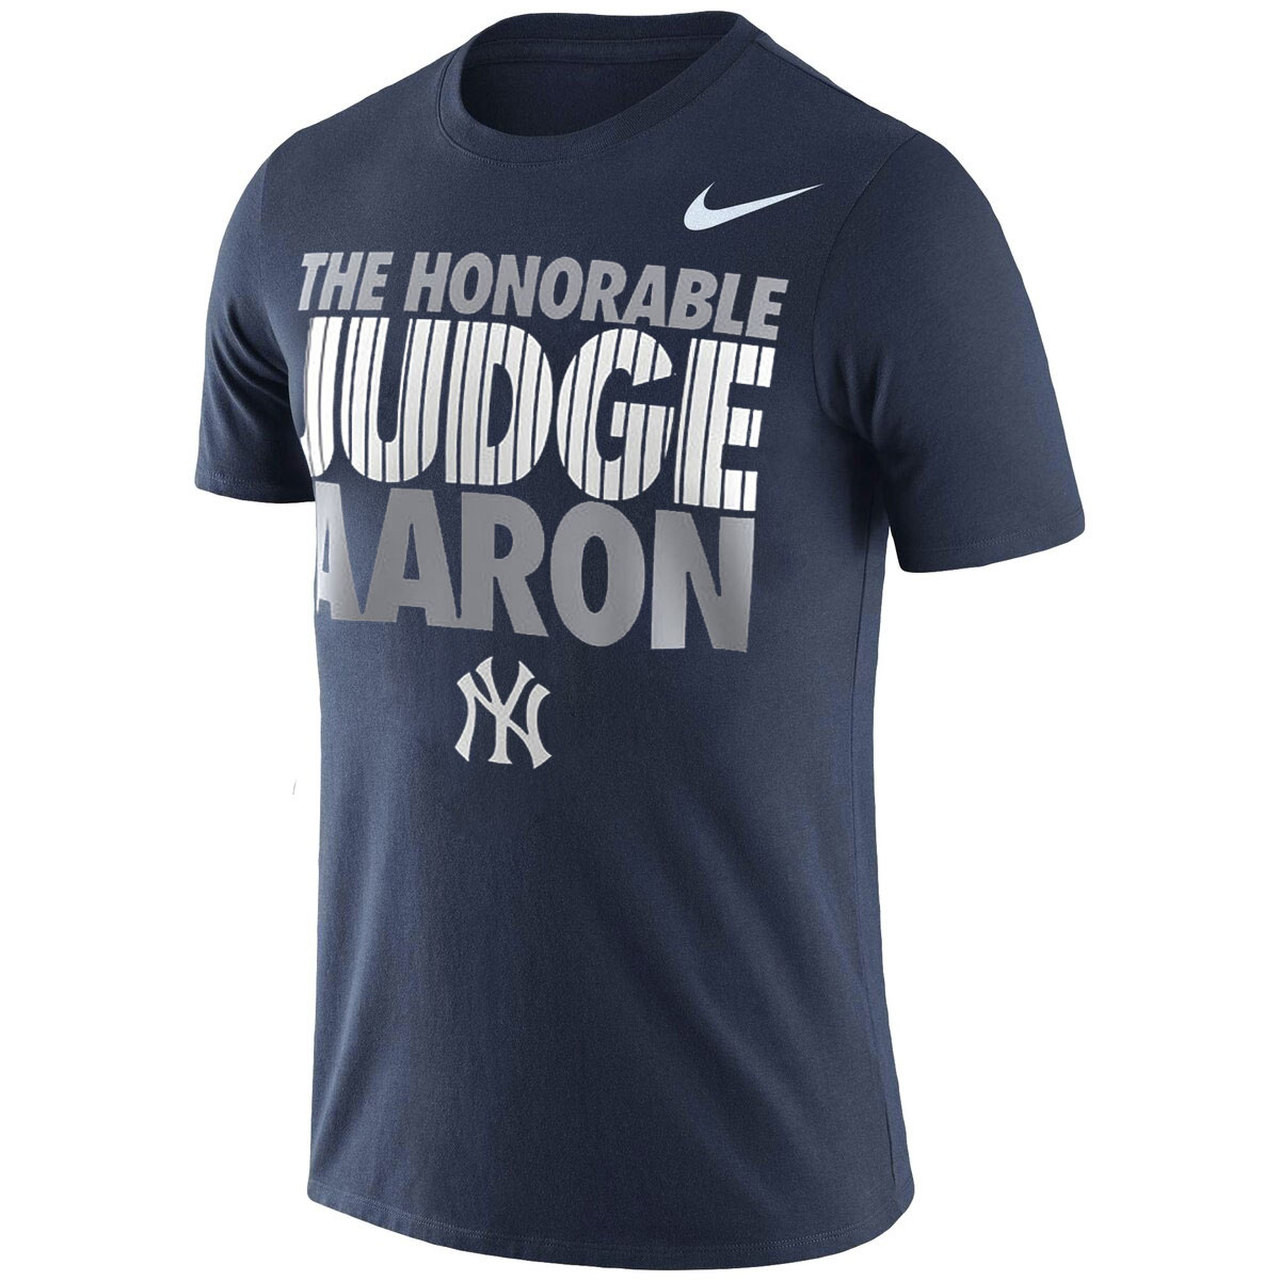 Aaron Judge New York Knicks Shirt - Peanutstee